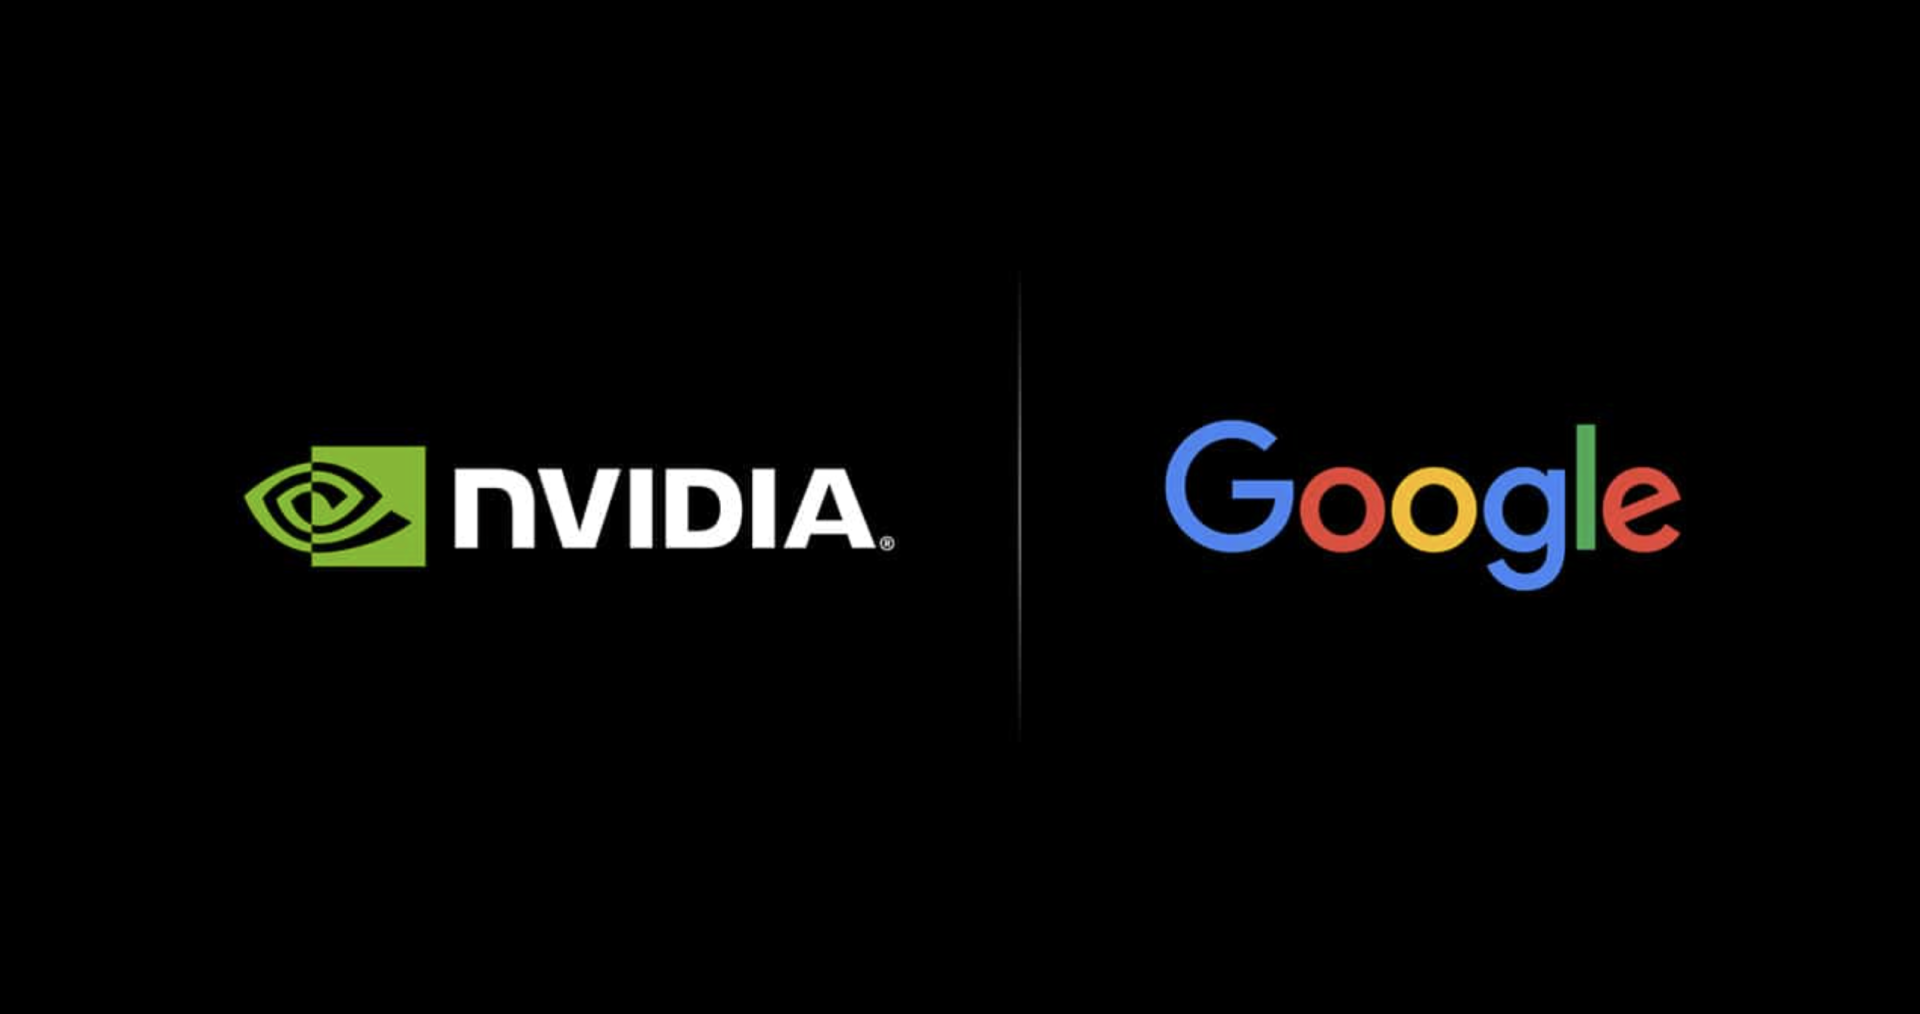 Google’S Gemma Language Models Supercharged On Nvidia Gpus, Boosting Ai Performance Globally